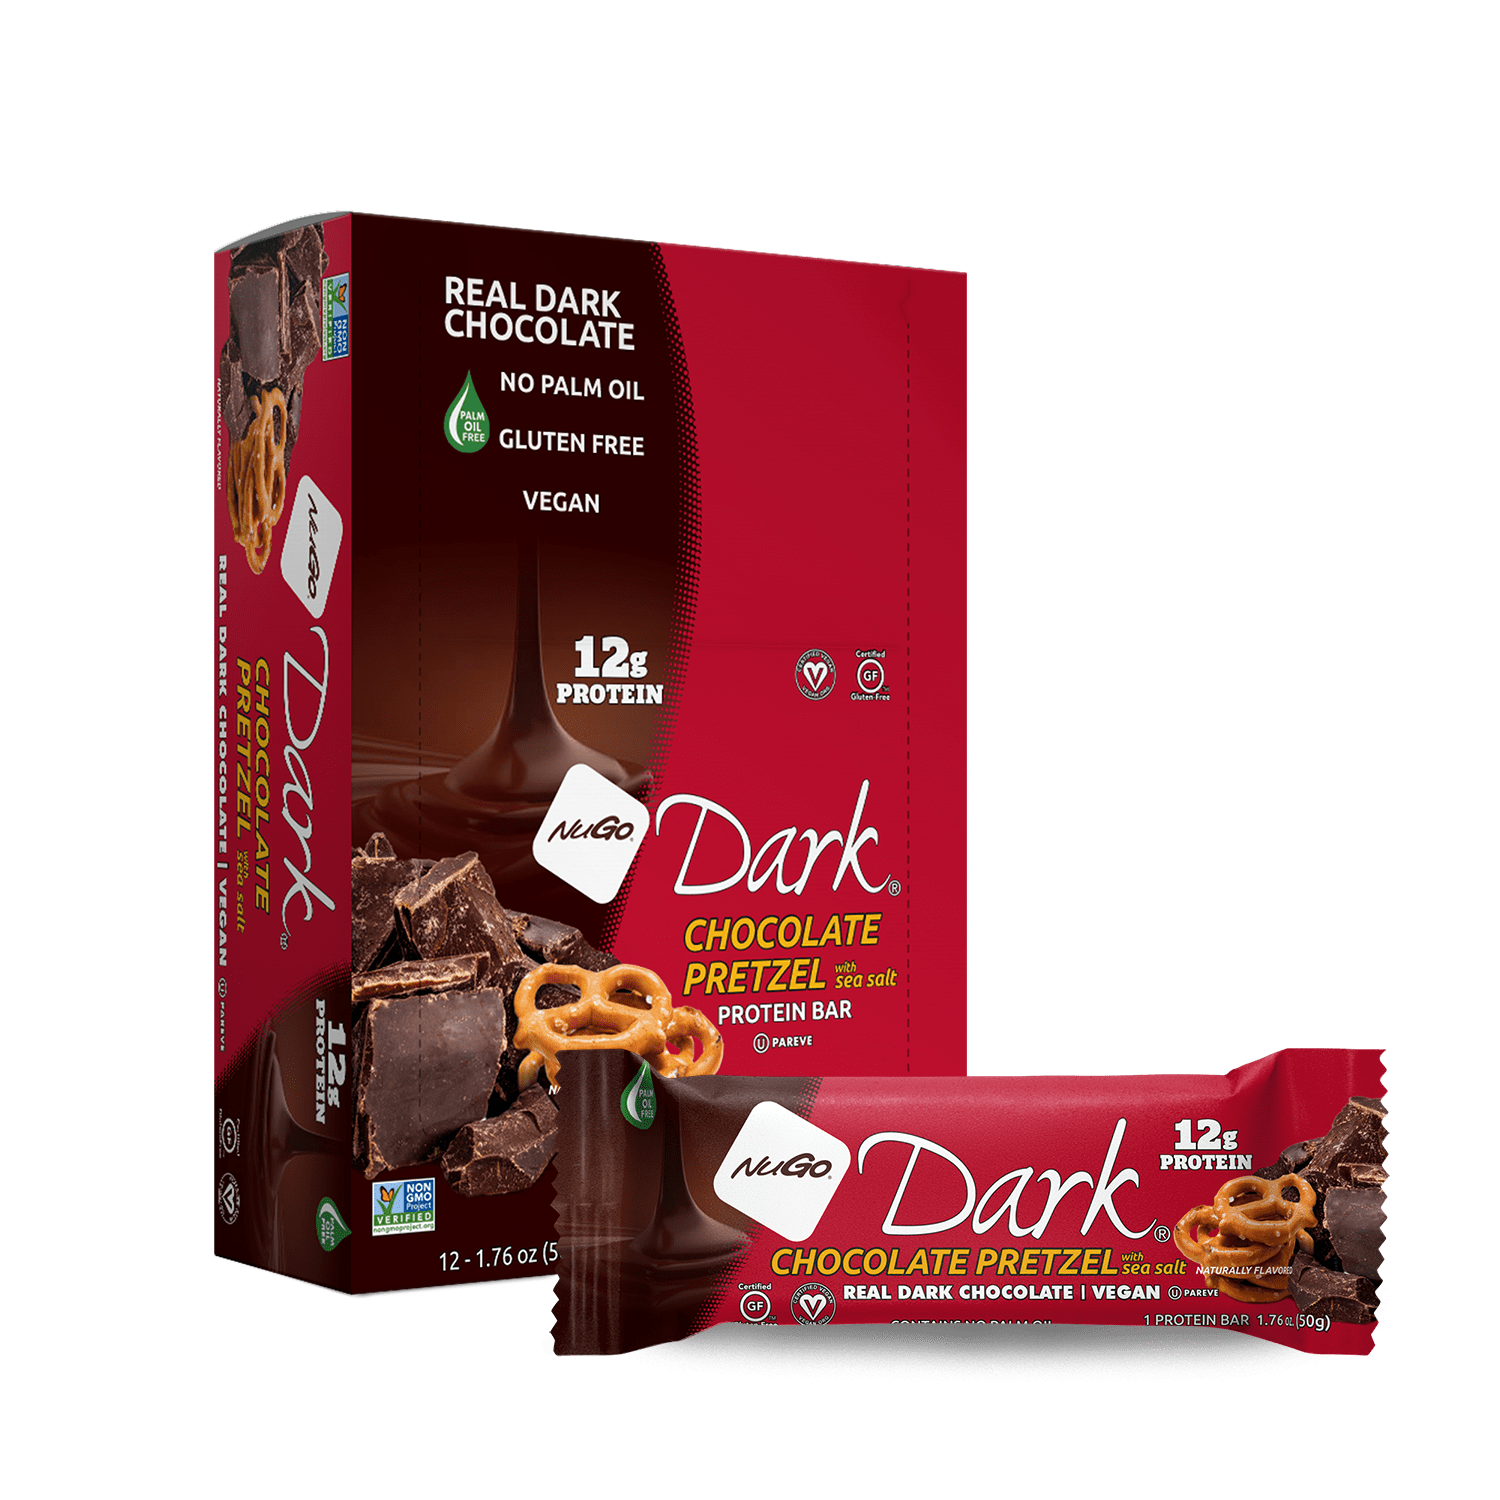 NuGo Dark Chocolate Pretzel Bar and Box